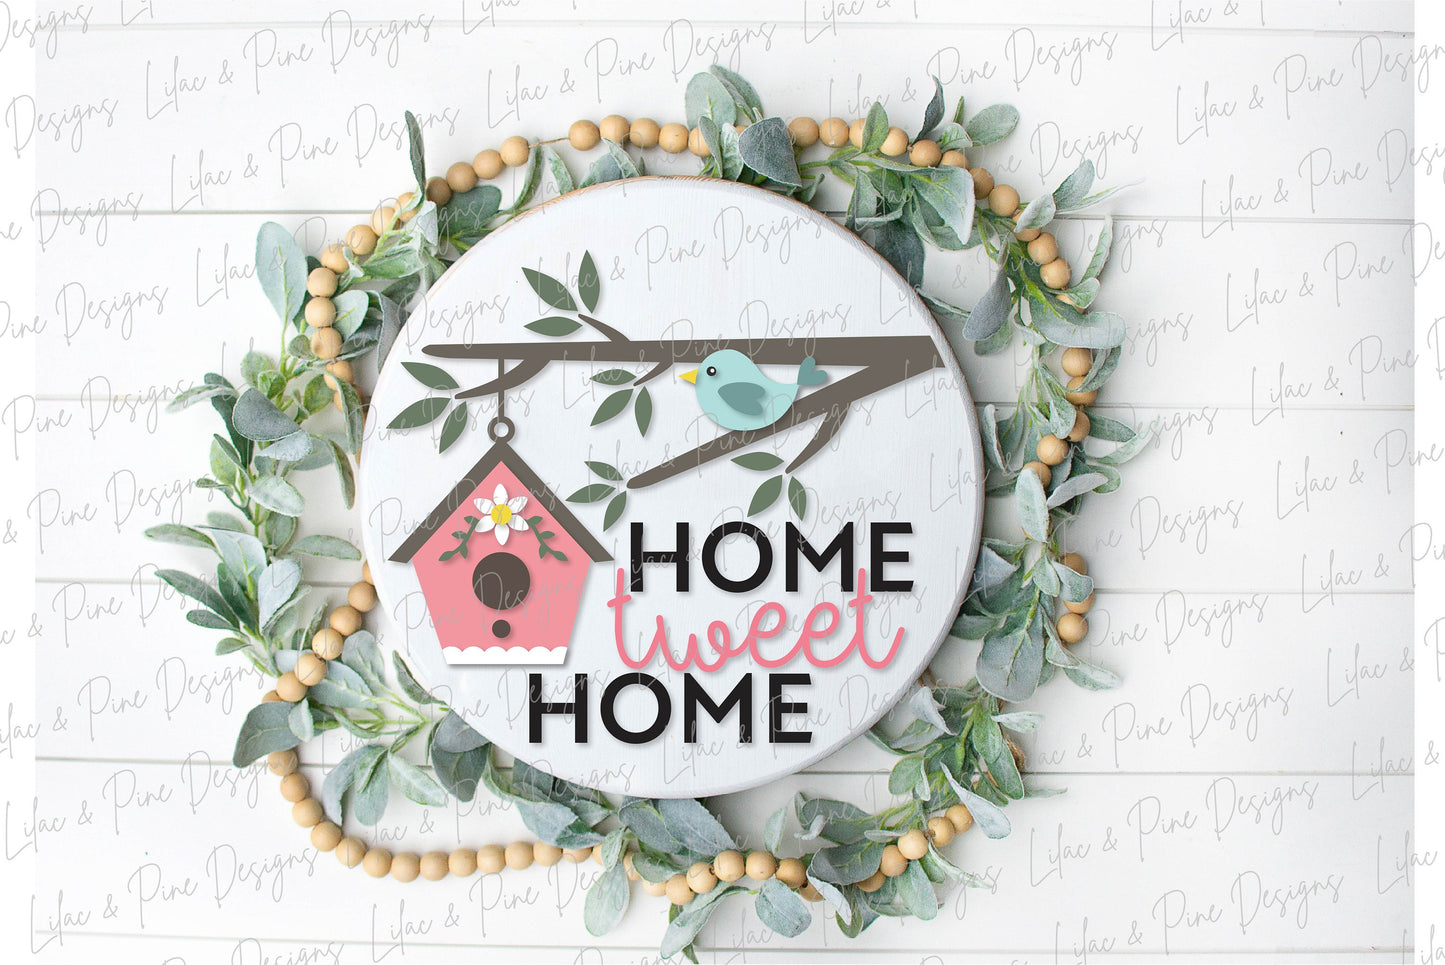 Home Tweet Home door hanger SVG, Birdhouse Welcome sign, Bird round sign, Summer decor, Bird decor, Glowforge cut file, laser SVG file